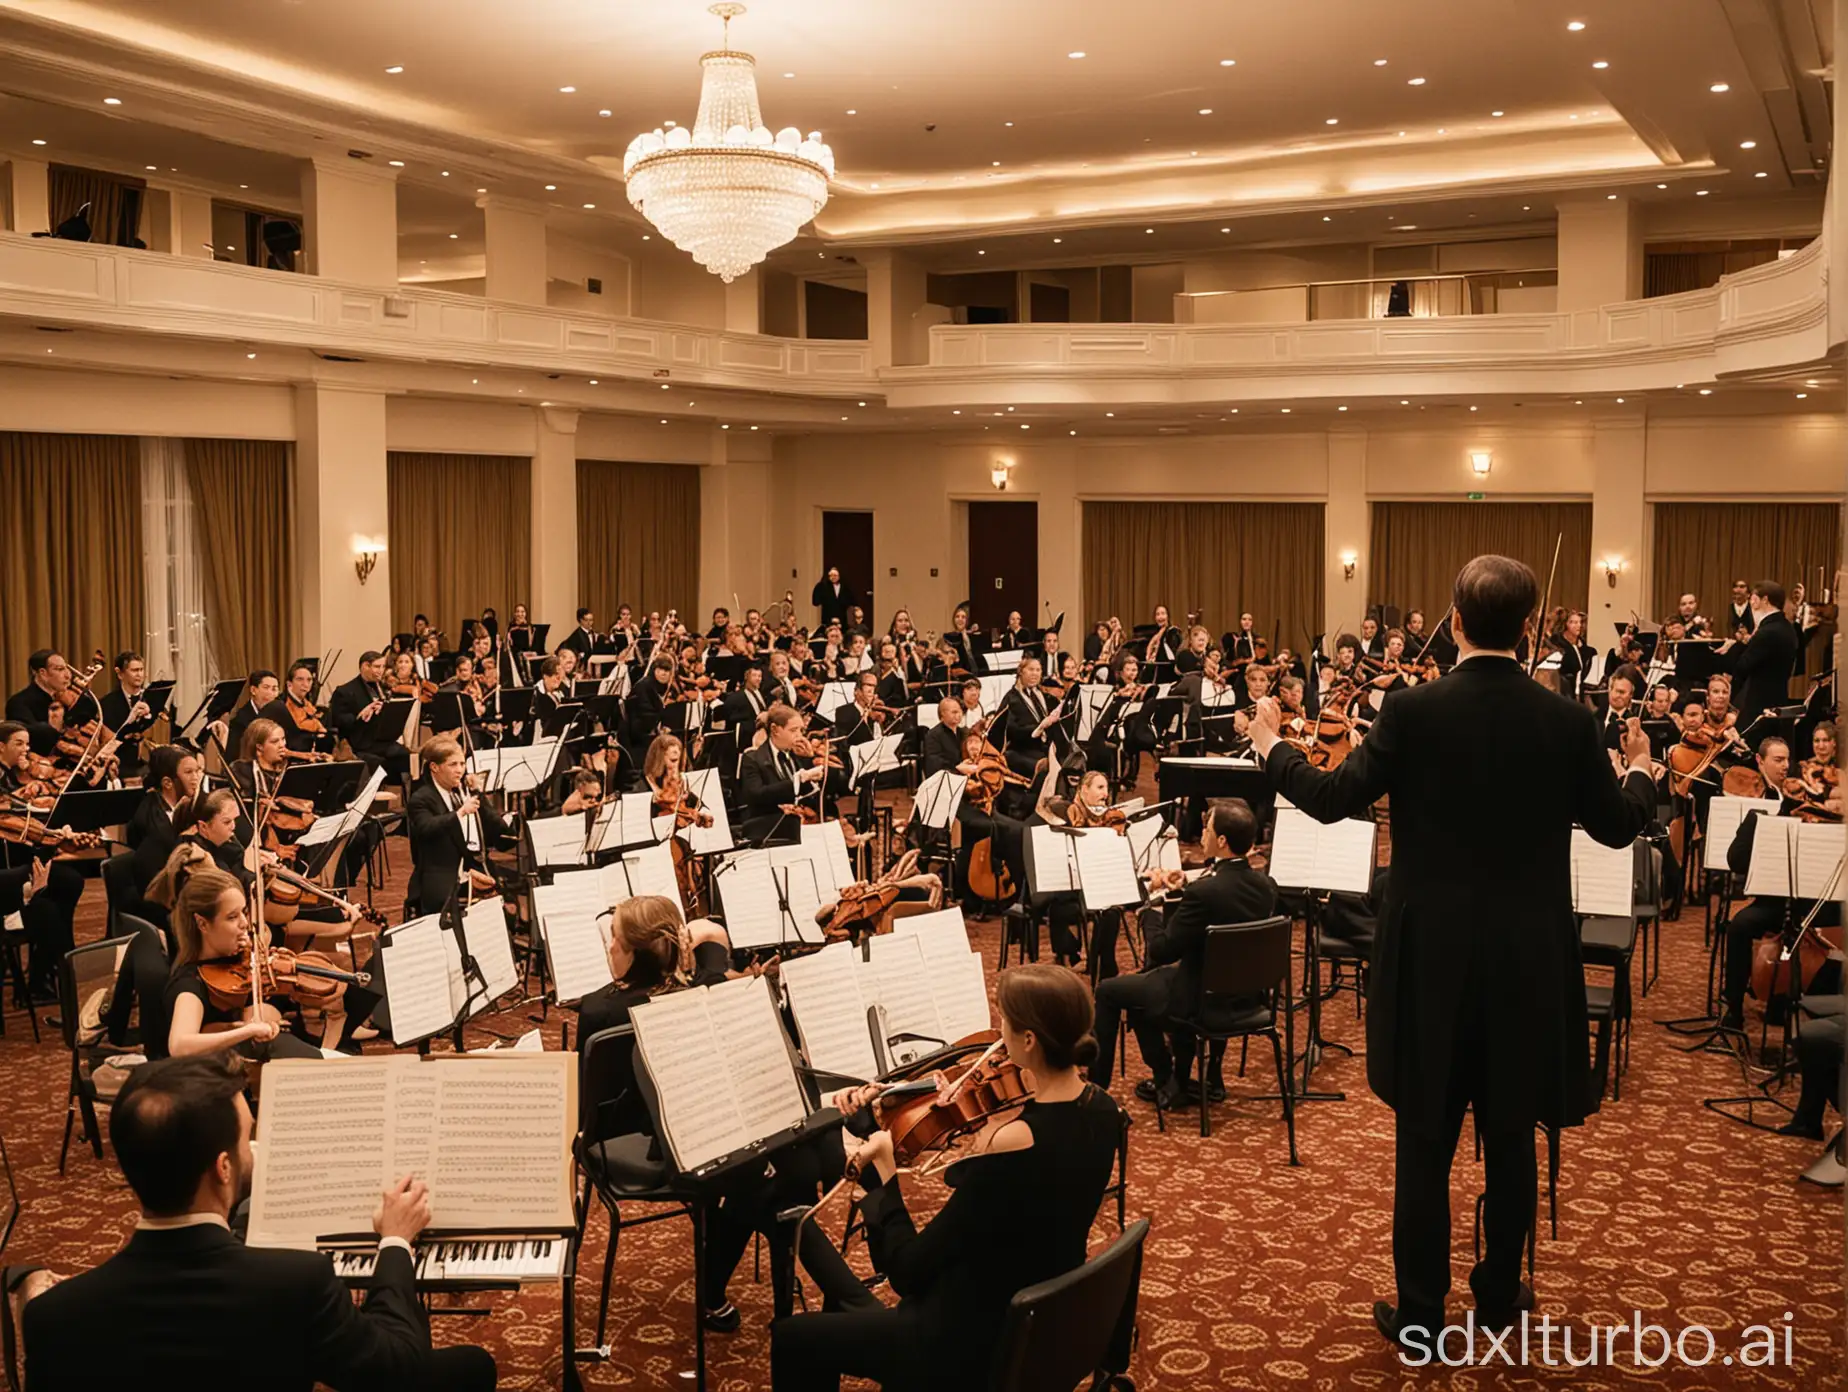 Elegant-Symphony-Orchestra-Performance-in-Luxurious-Hotel-Ballroom